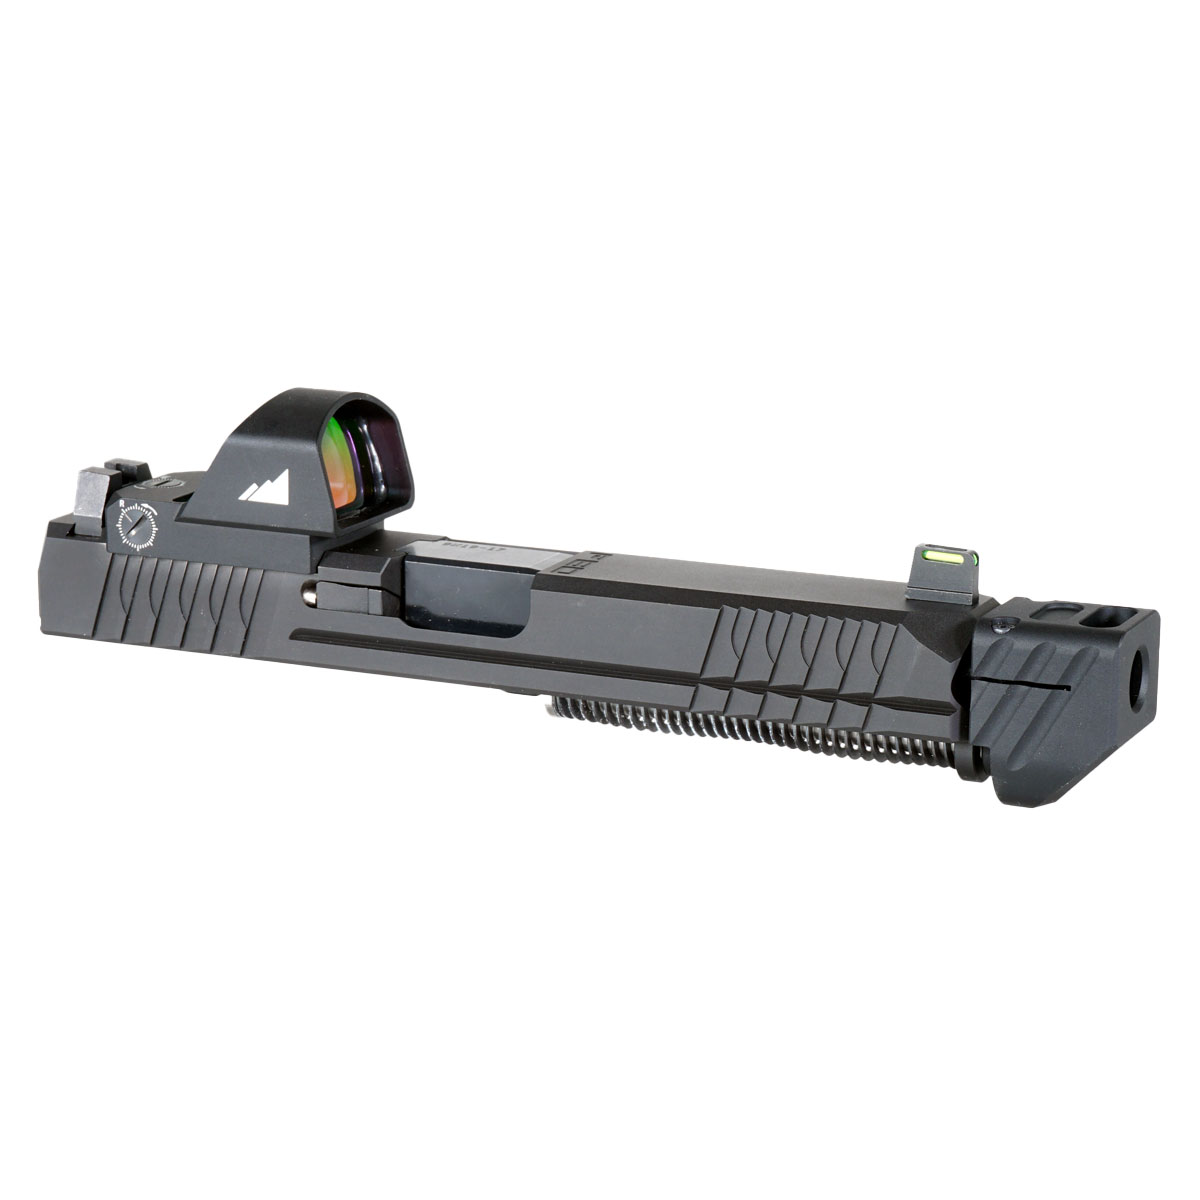 MMC 'Liber-Tea' 9mm Complete Slide Kit - Glock 17 Gen 1-3 Compatible